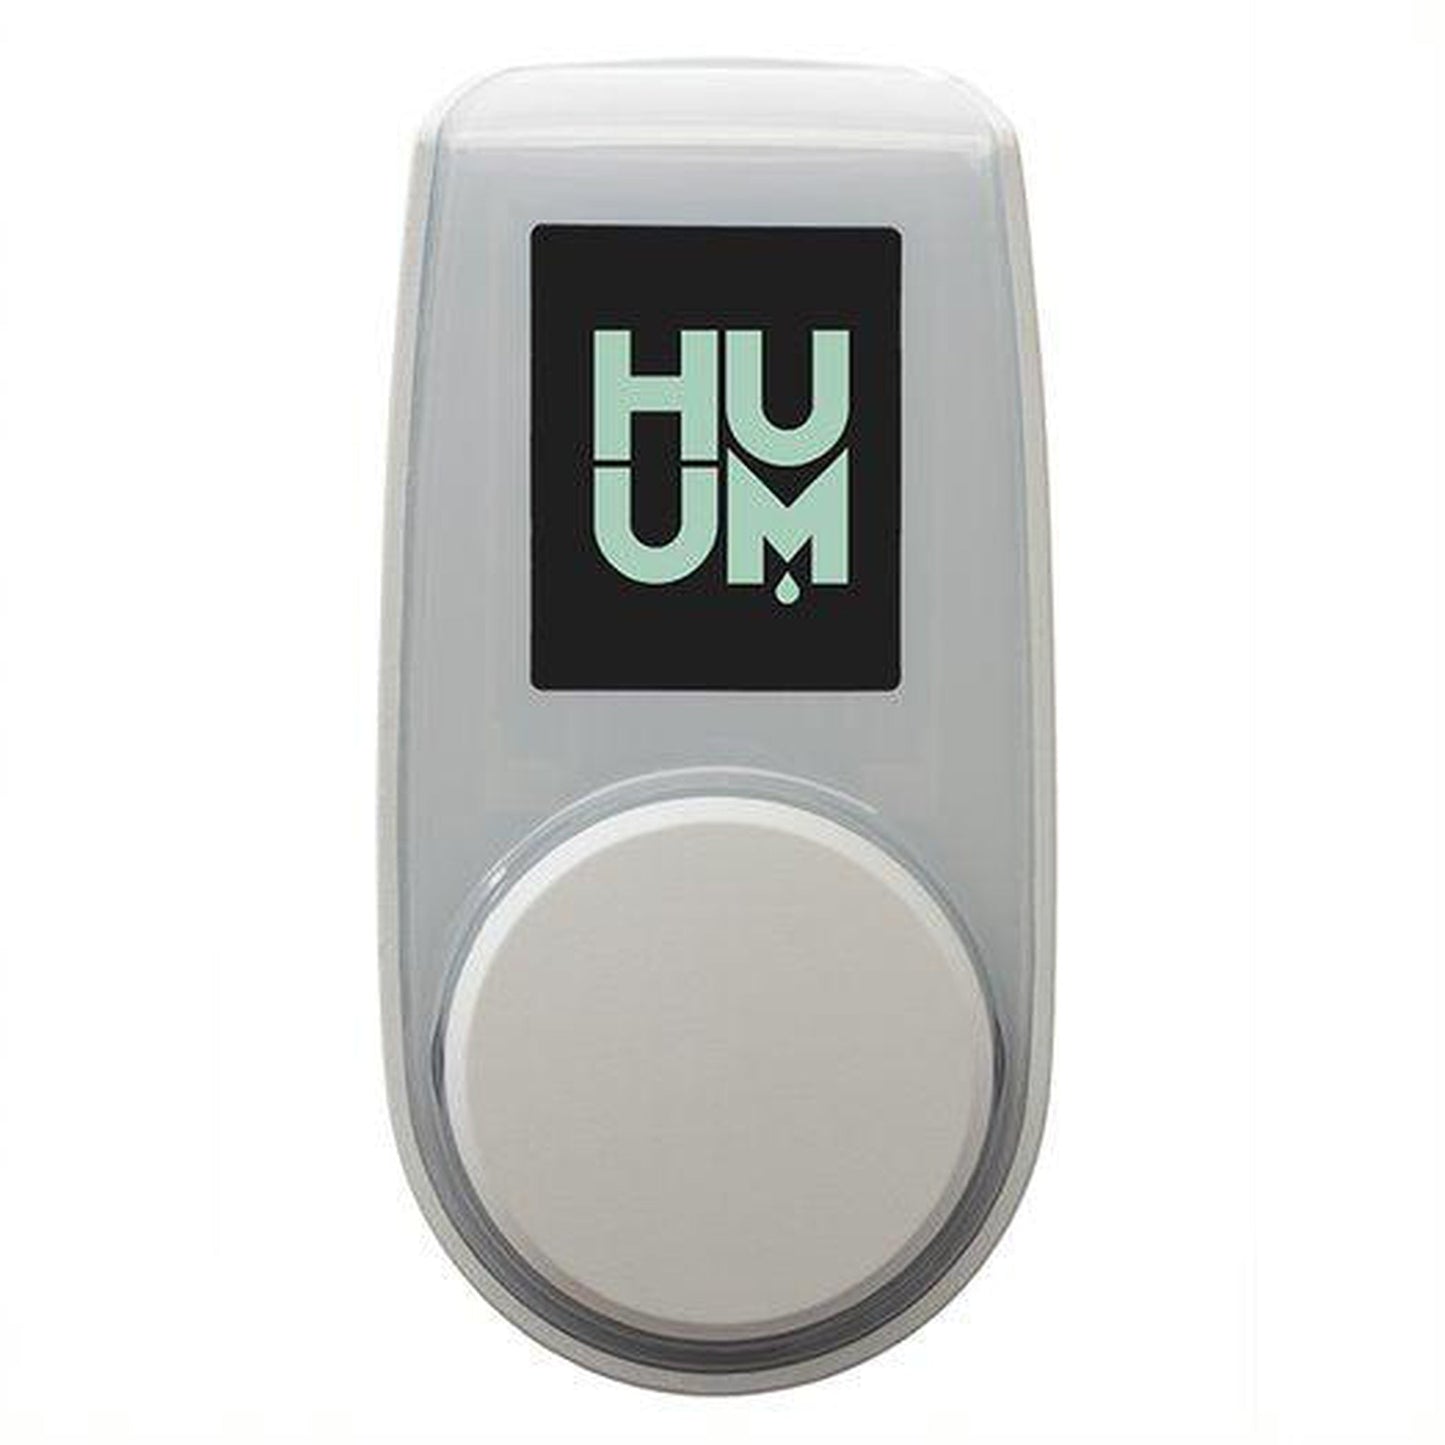 HUMM UKU 2" x 1" x 4" Digital On - Off, Time, Temperature Controller For Sauna Heater